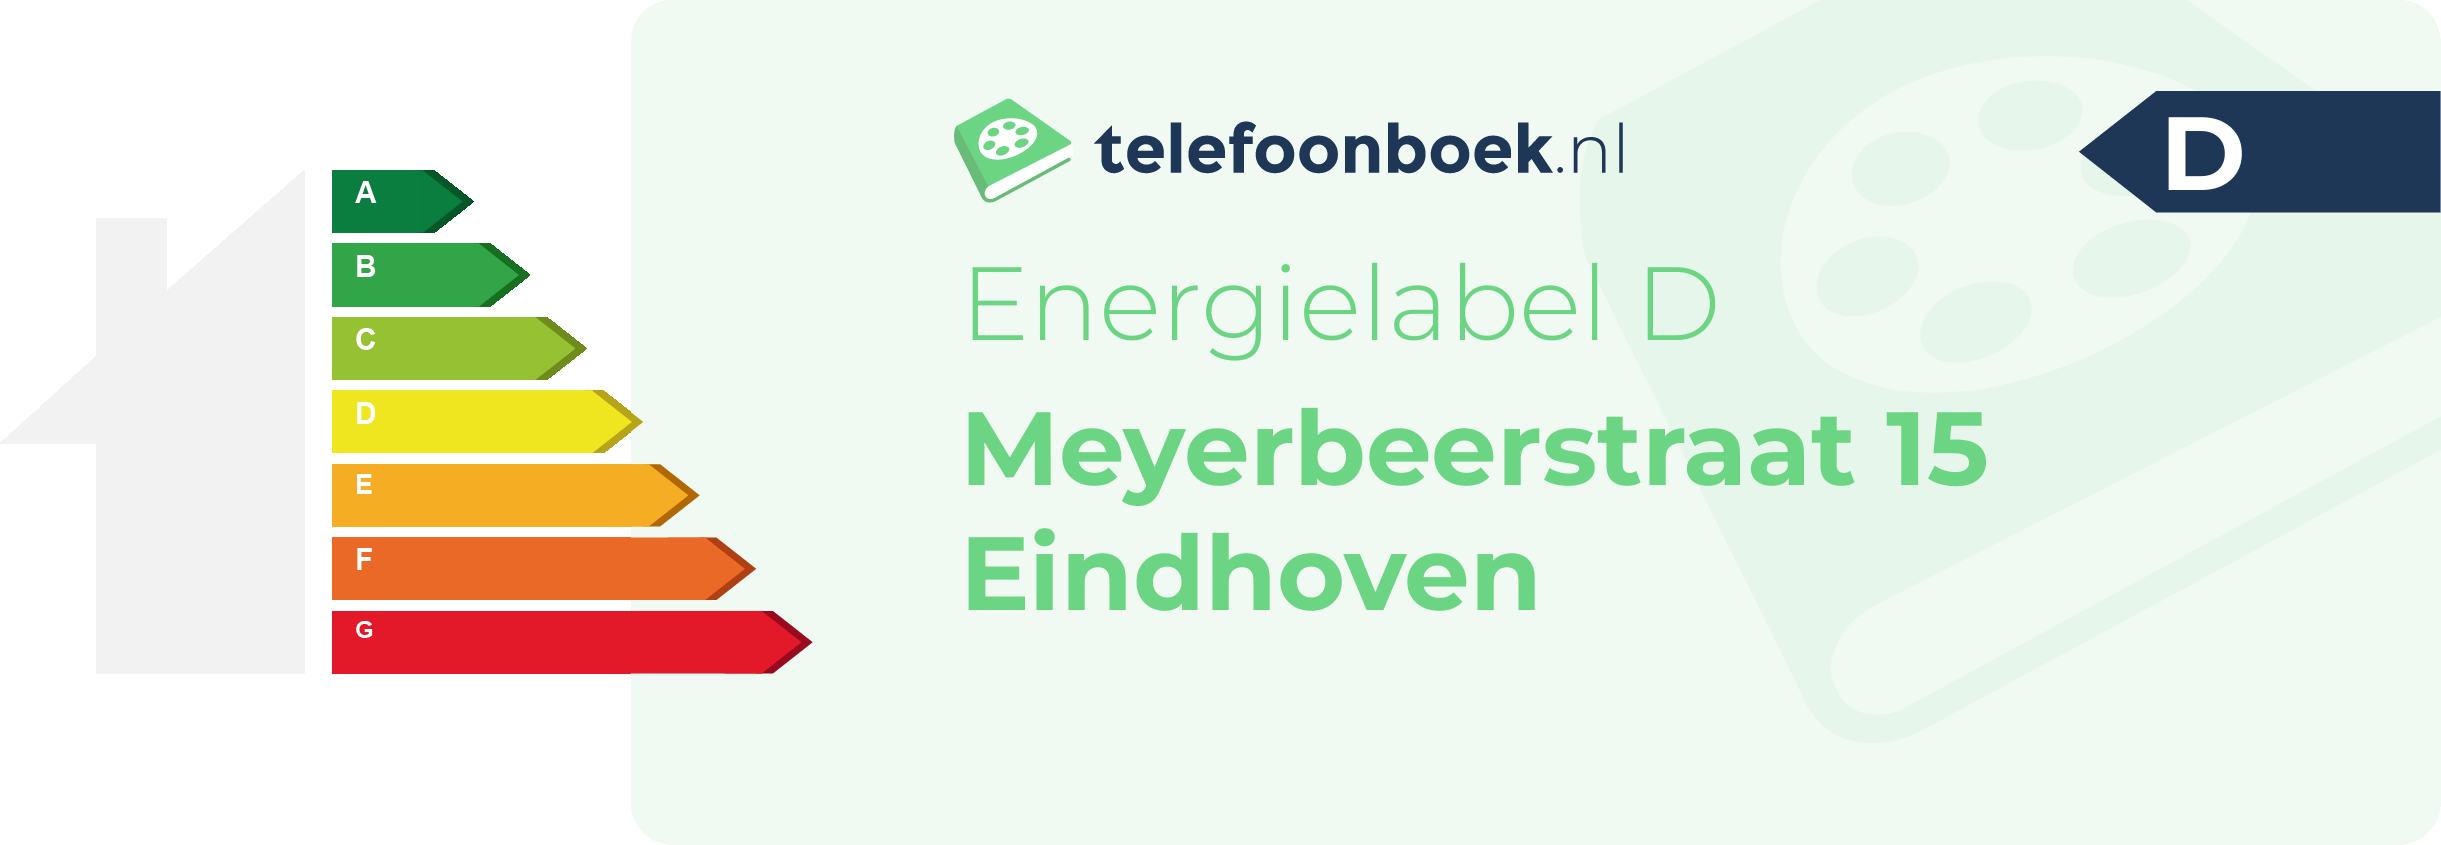 Energielabel Meyerbeerstraat 15 Eindhoven